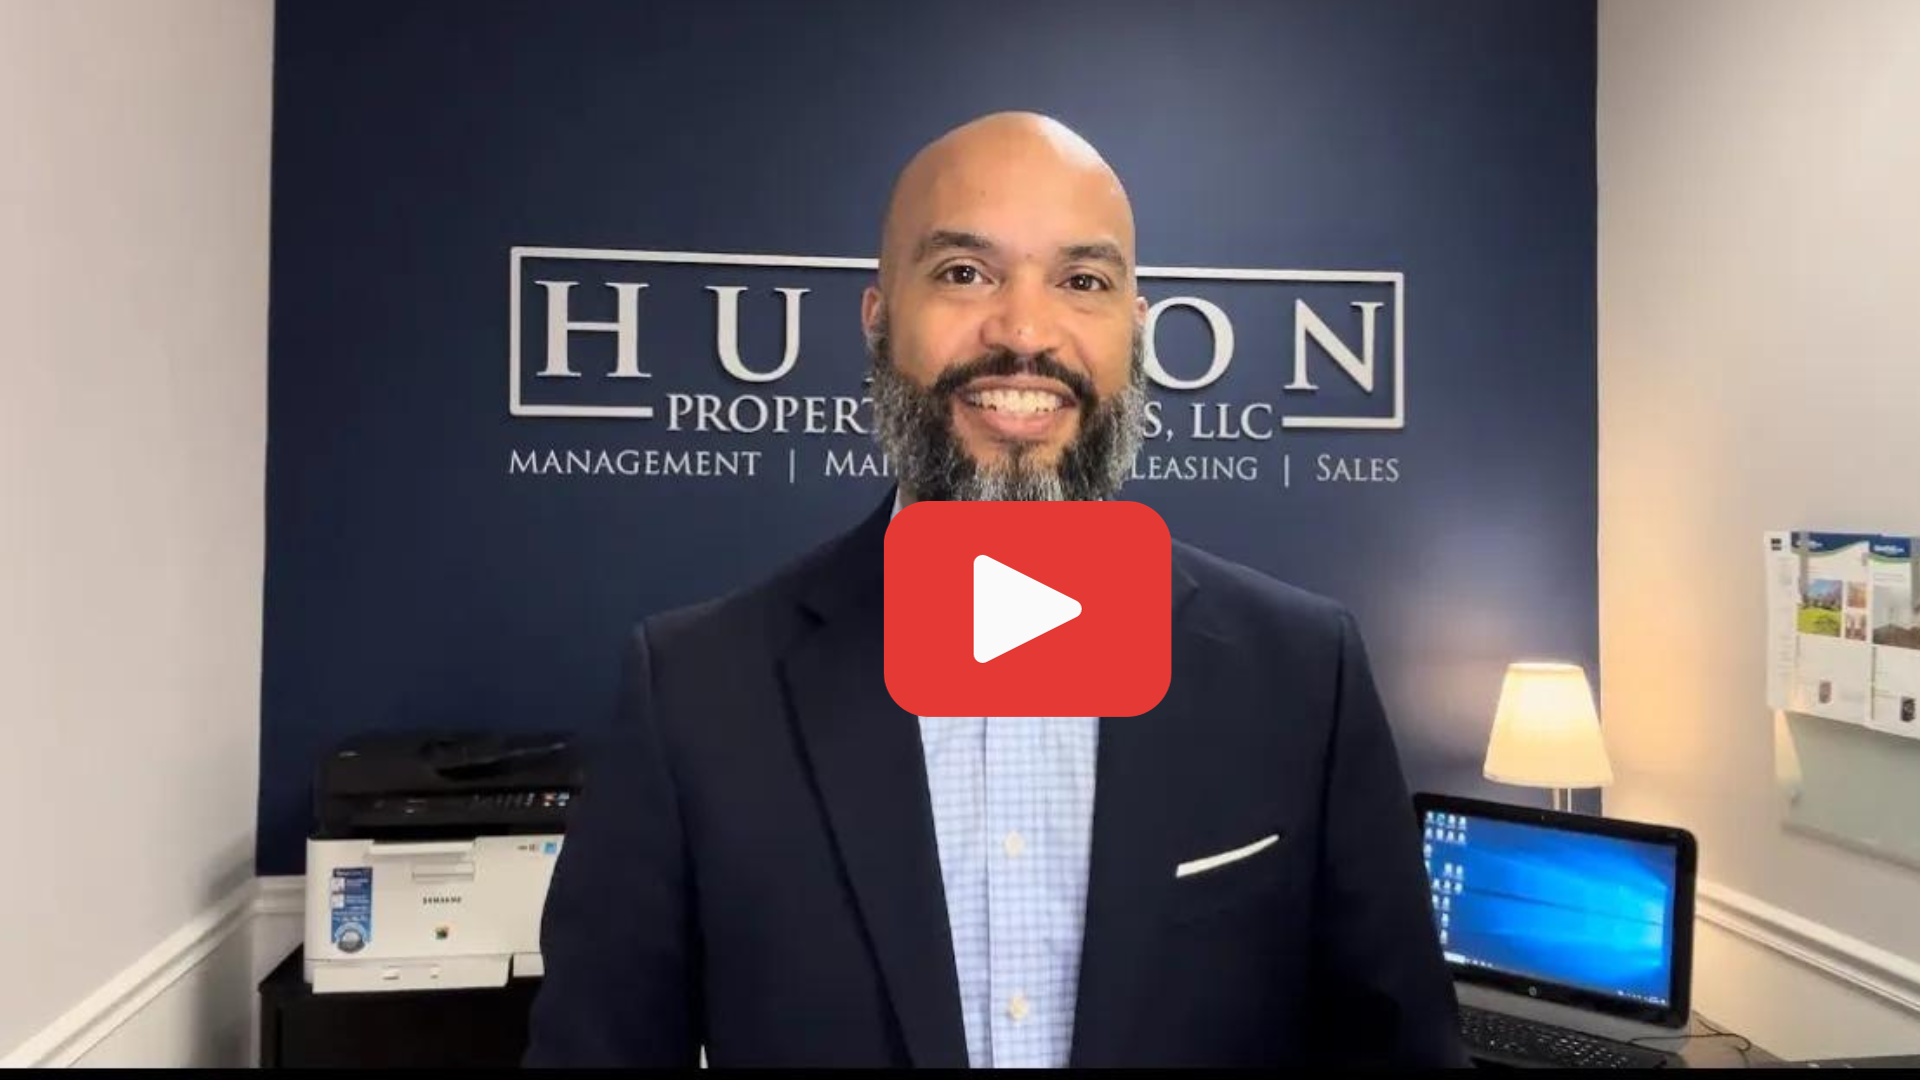 Matthew Cave recording video at Hudson Property Services, LLC